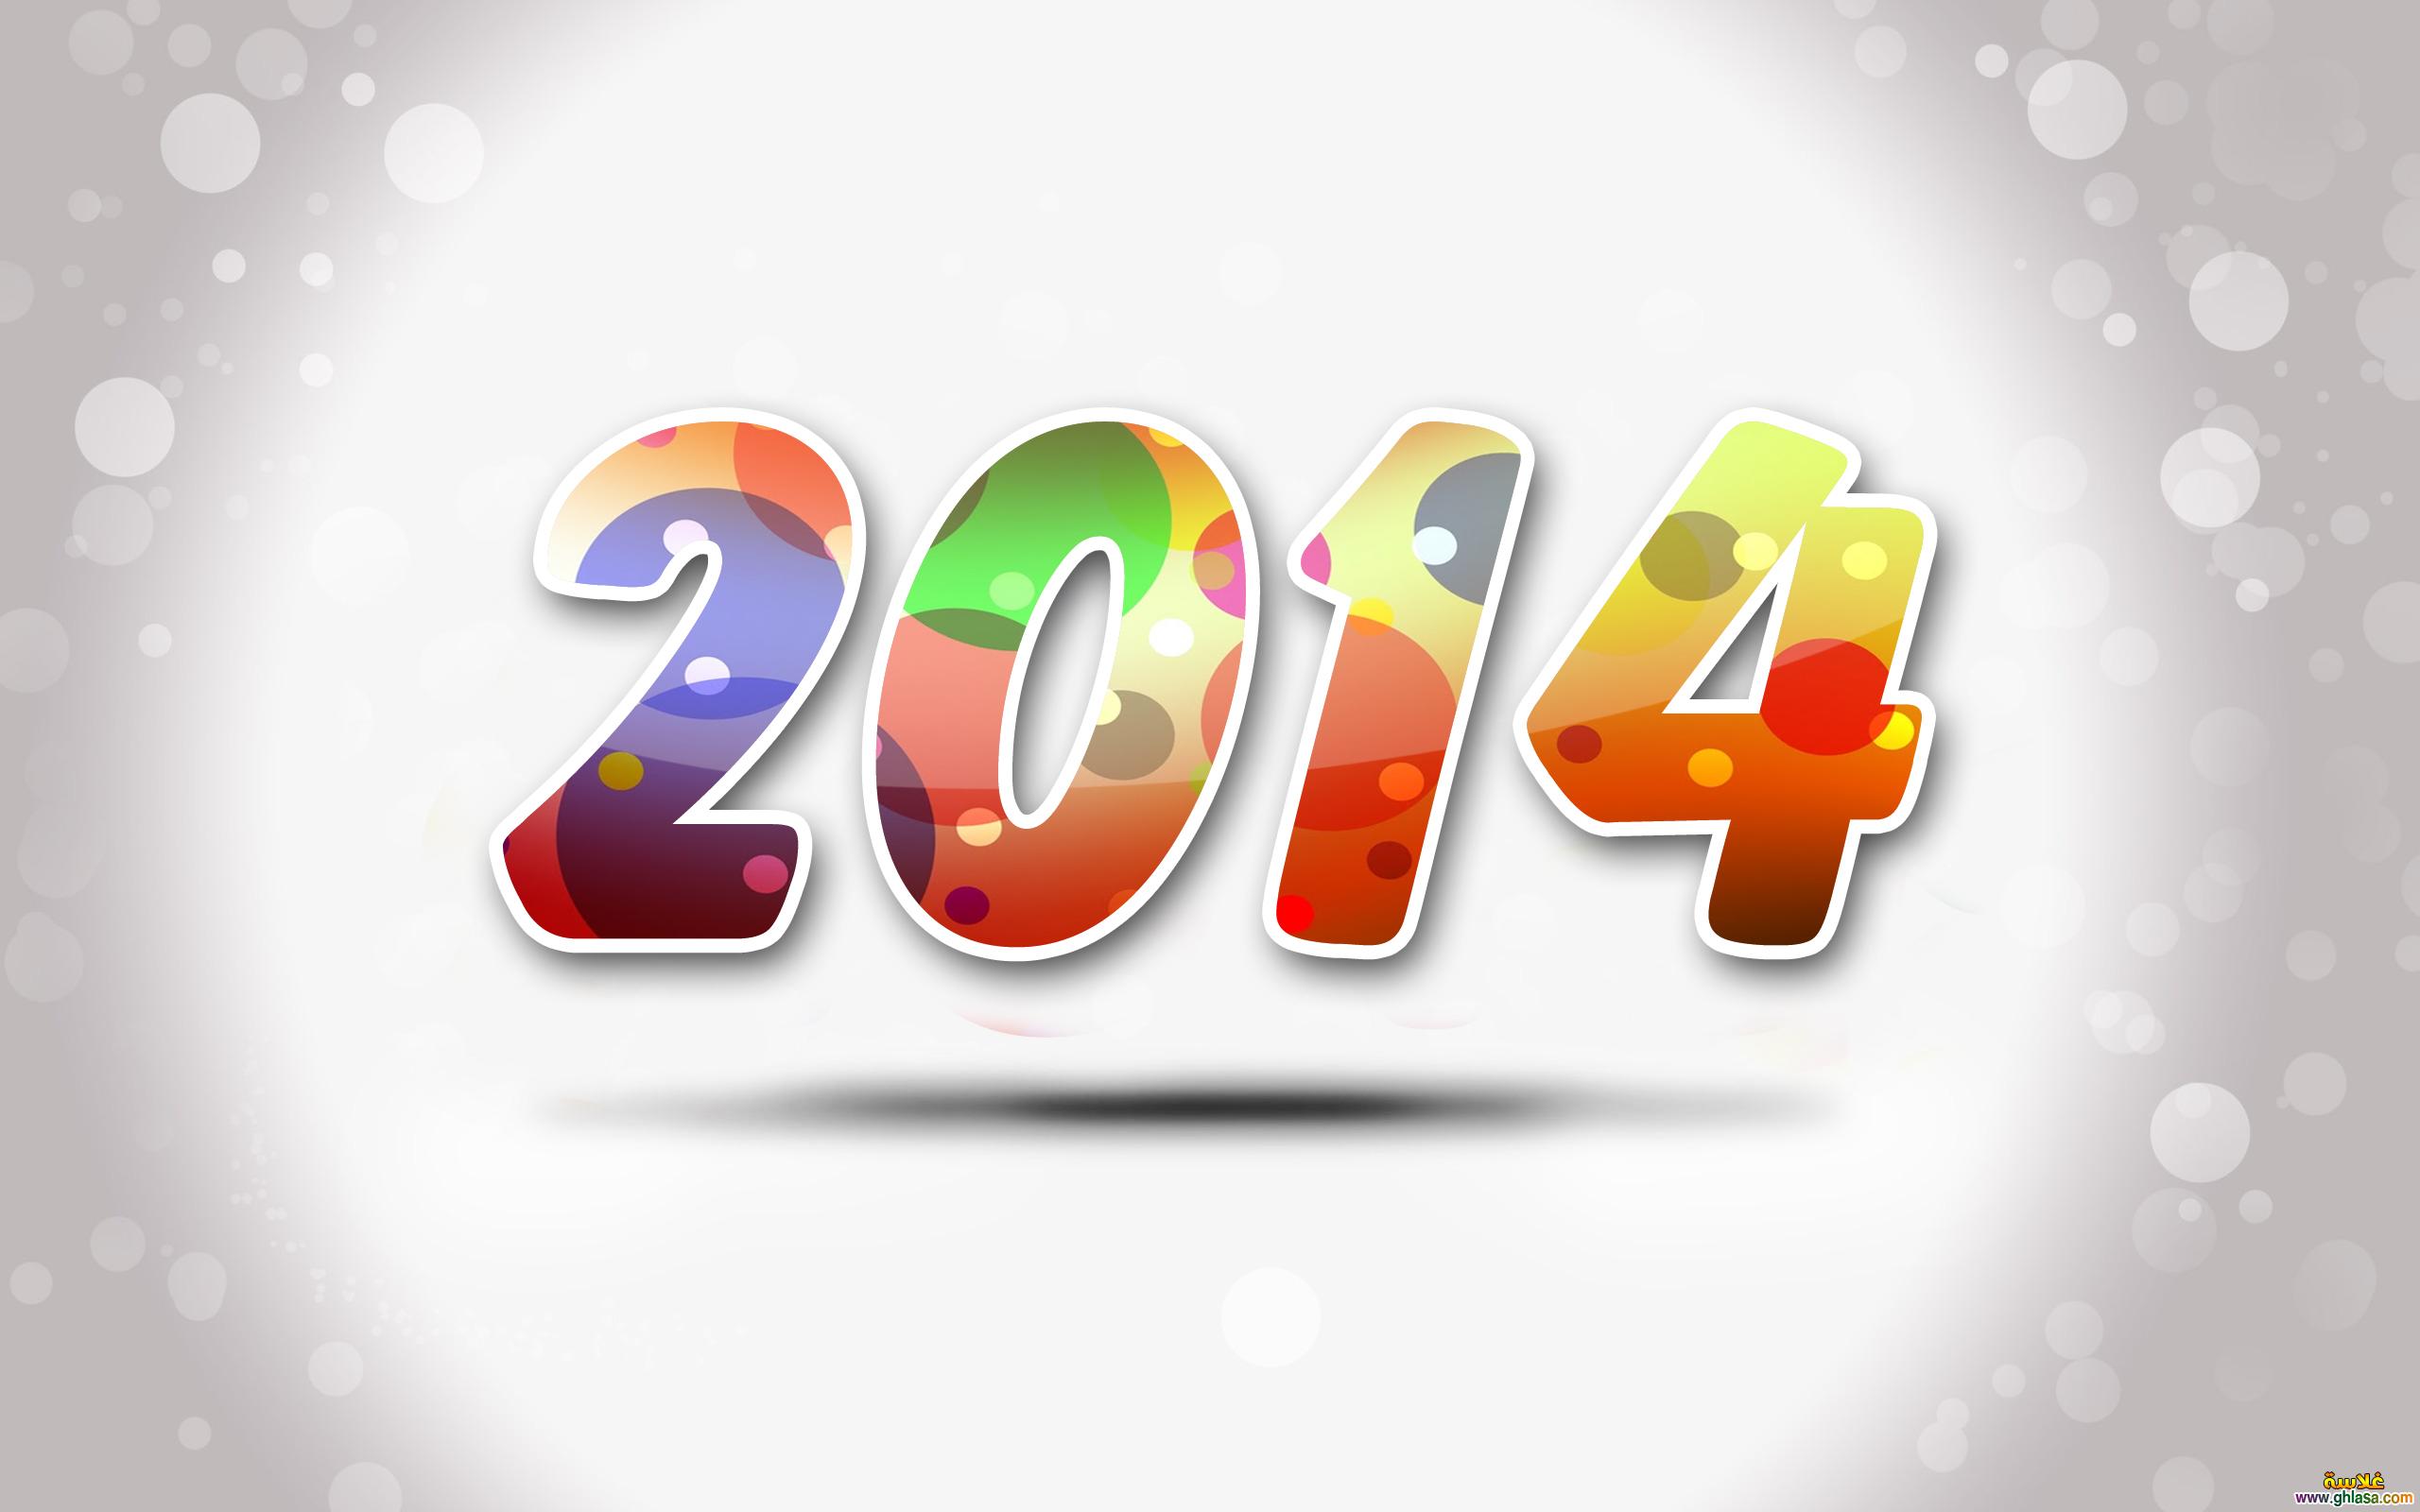     ٢٠١٤    2025  Wallpapers New Year 2025 ghlasa1384355434382.jpg